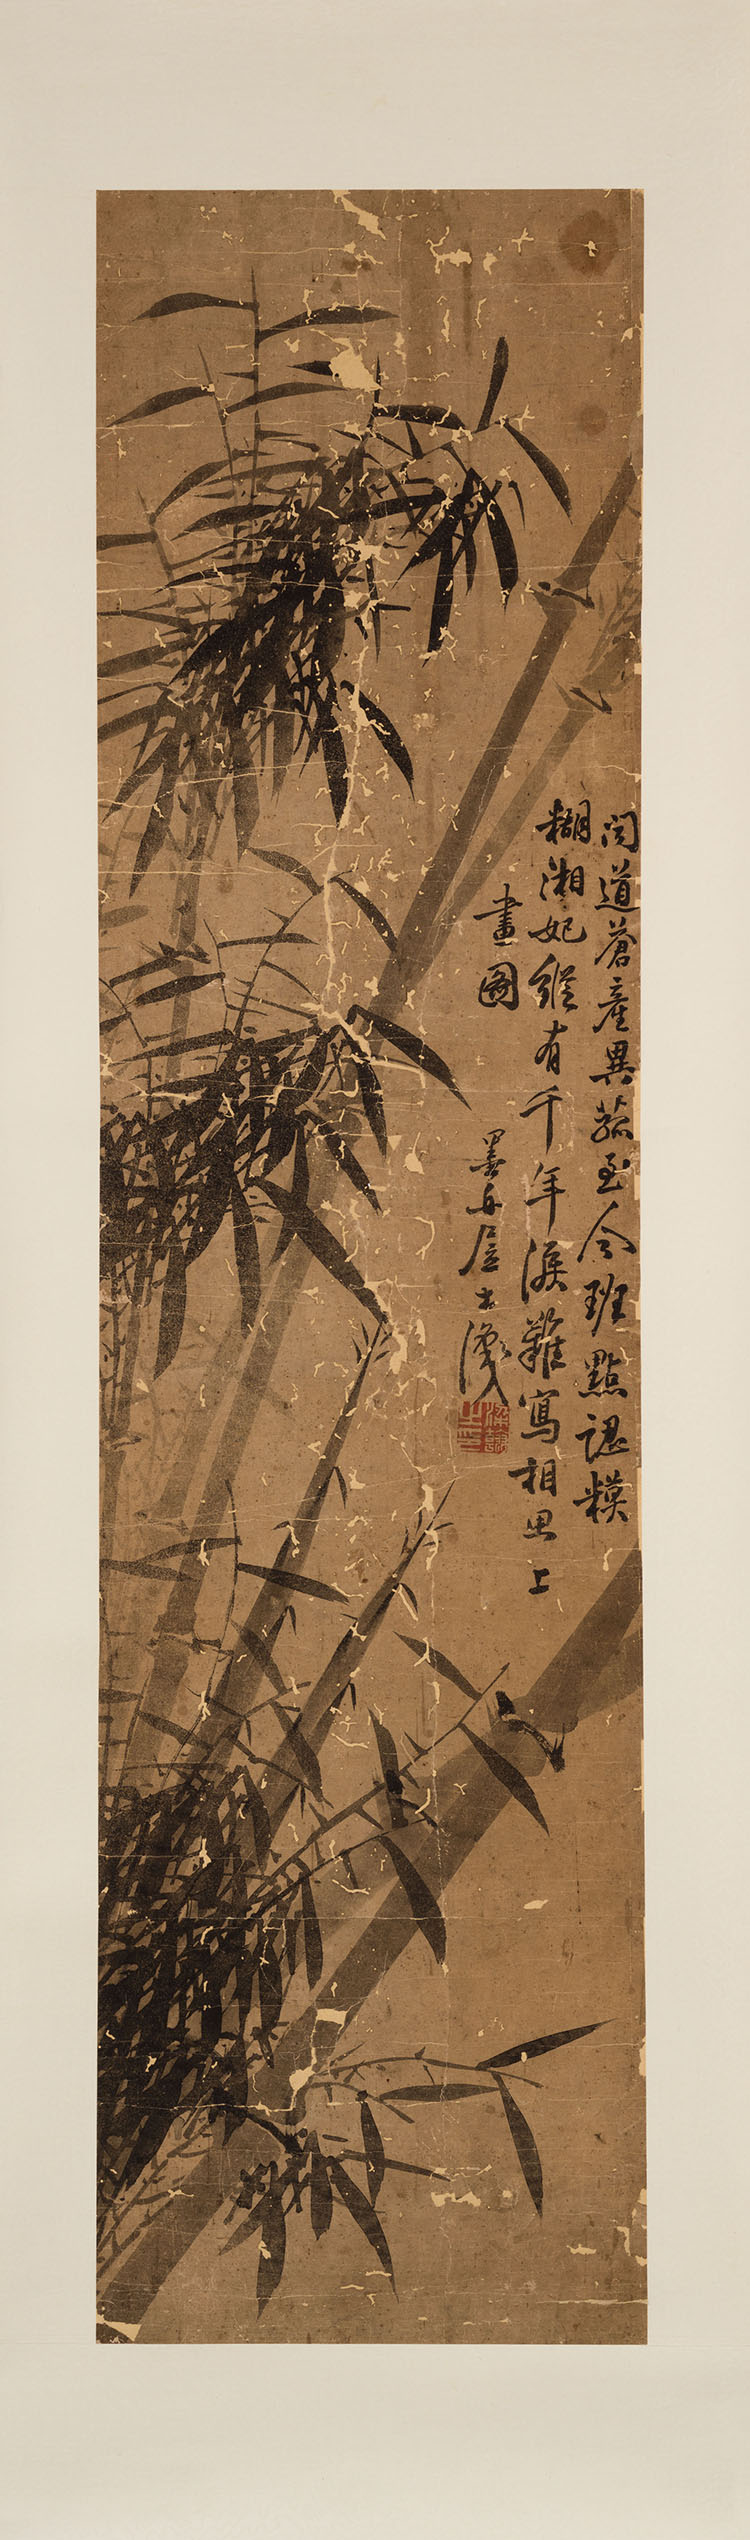 Bamboo by Liang Han